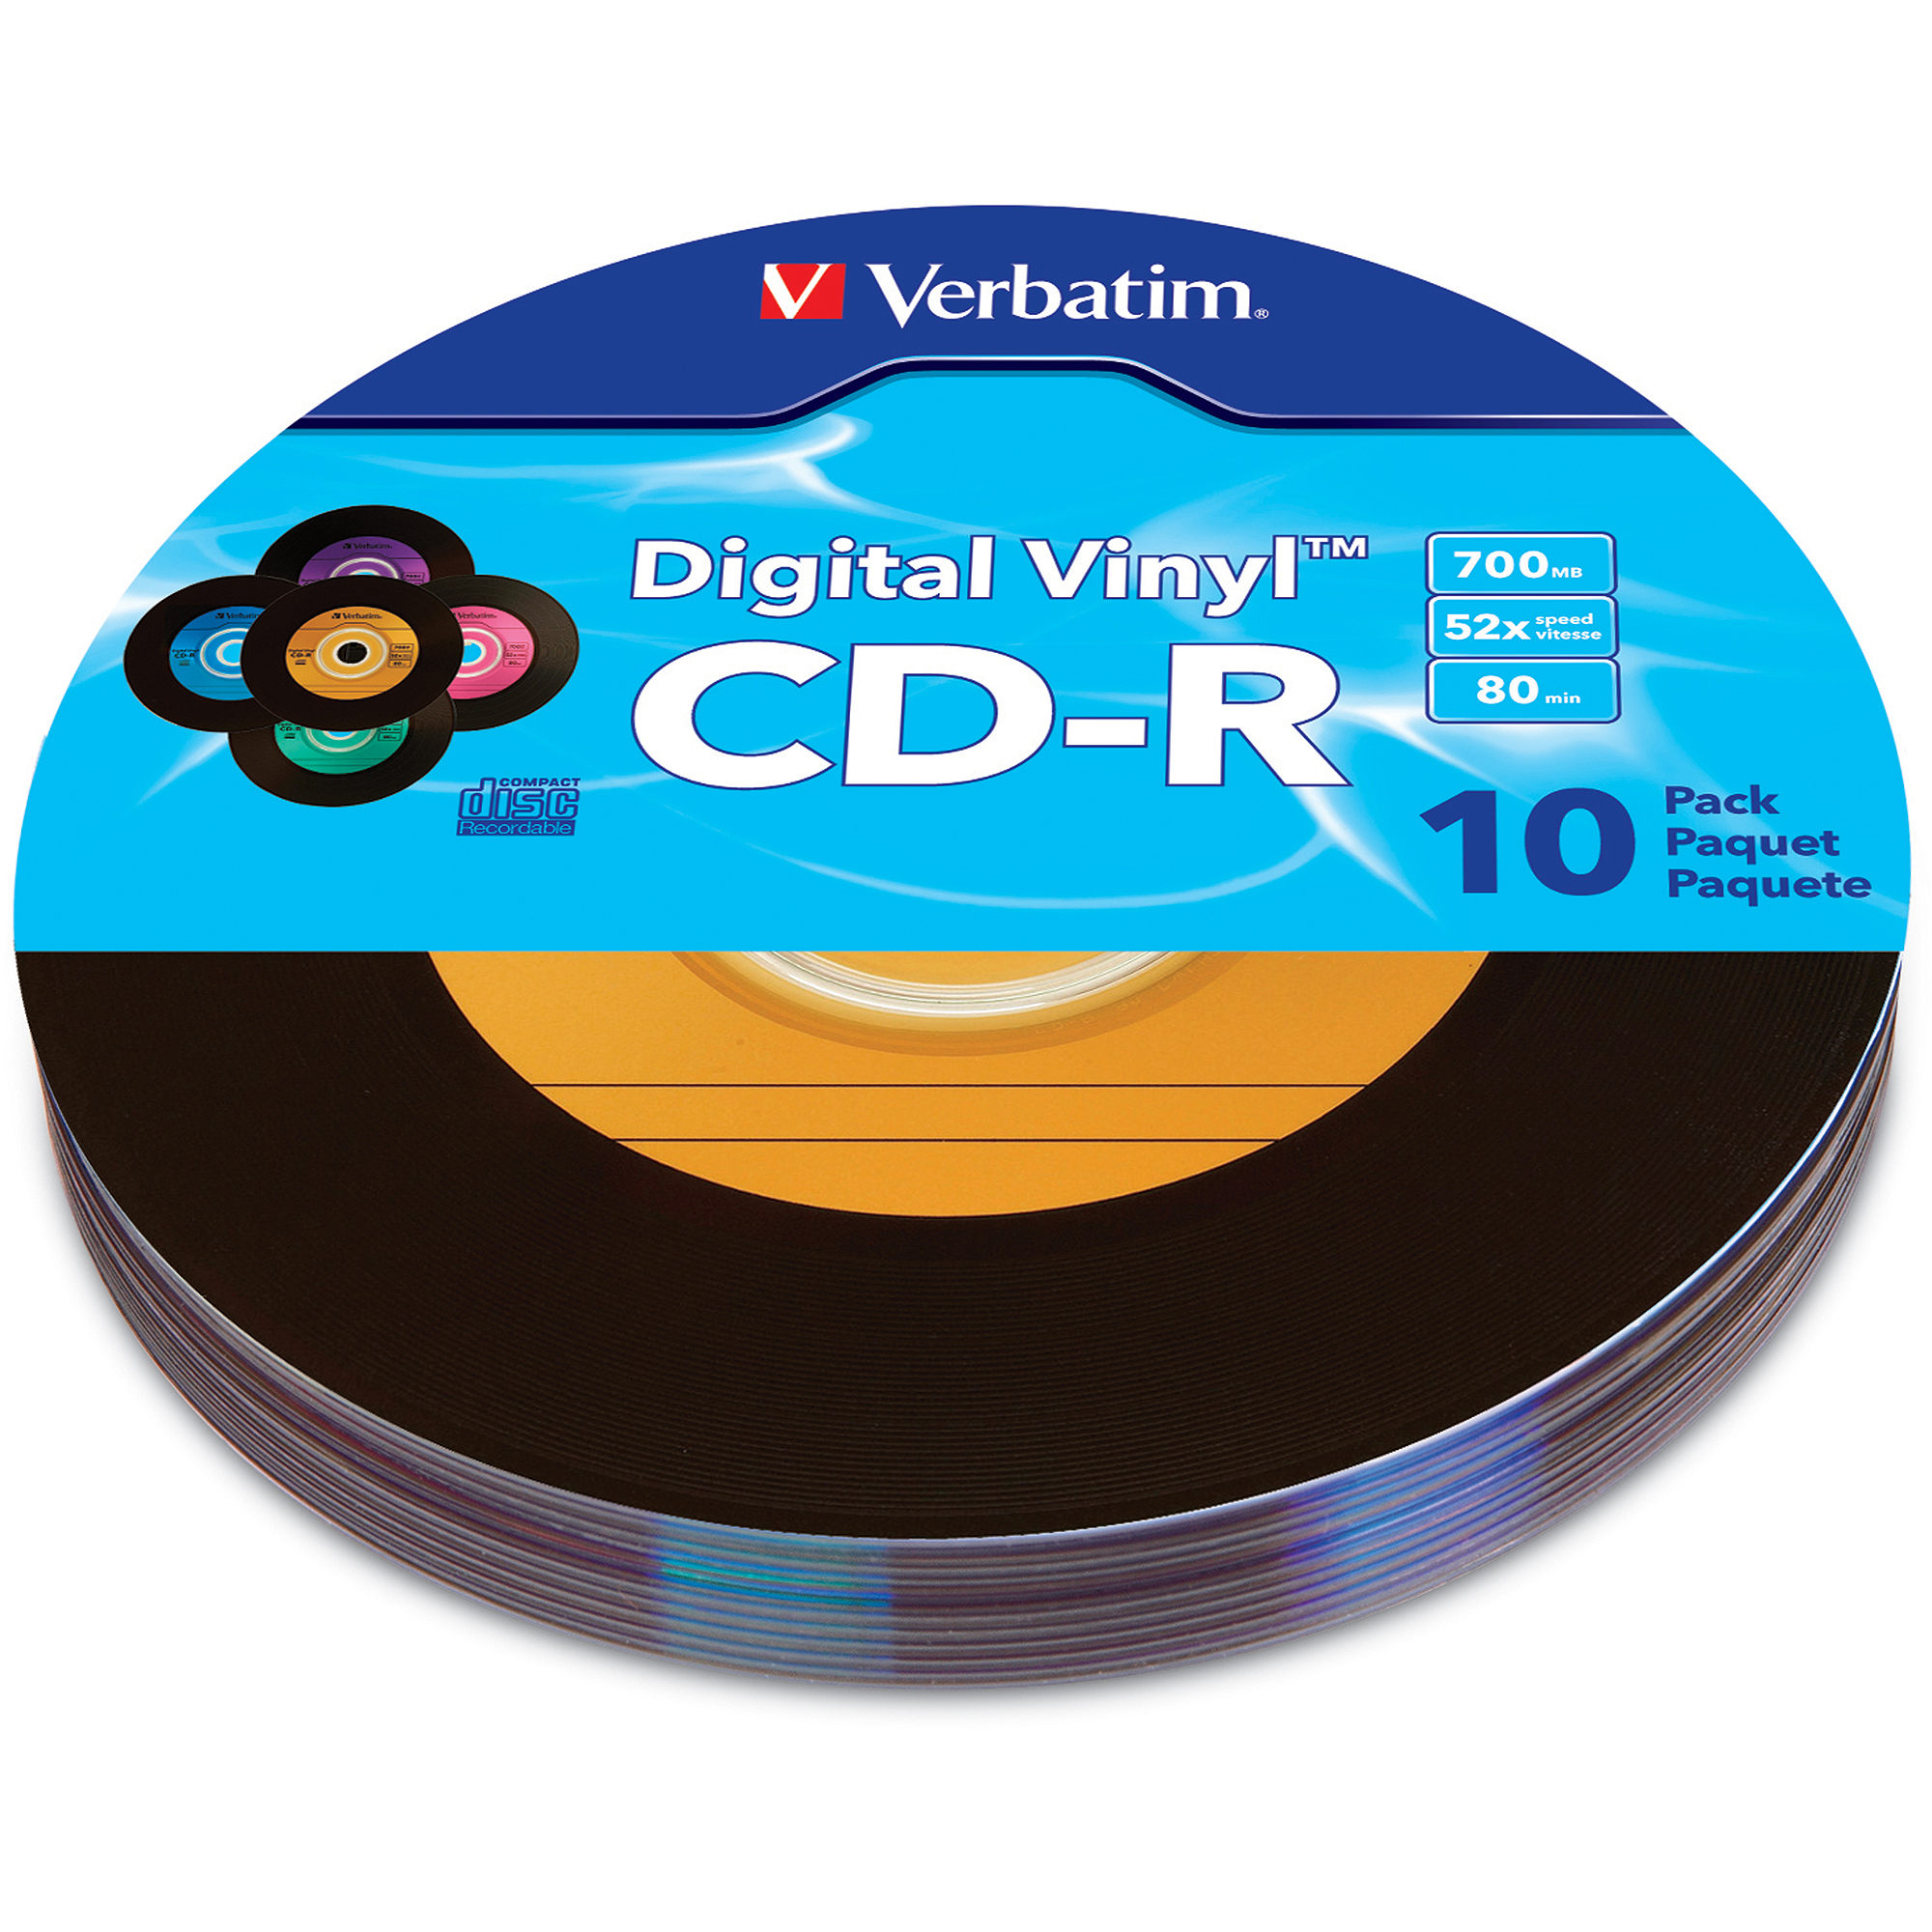 Verbatim Digital Vinyl 80-Min/700MB CD-R, 10pk - Walmart.com